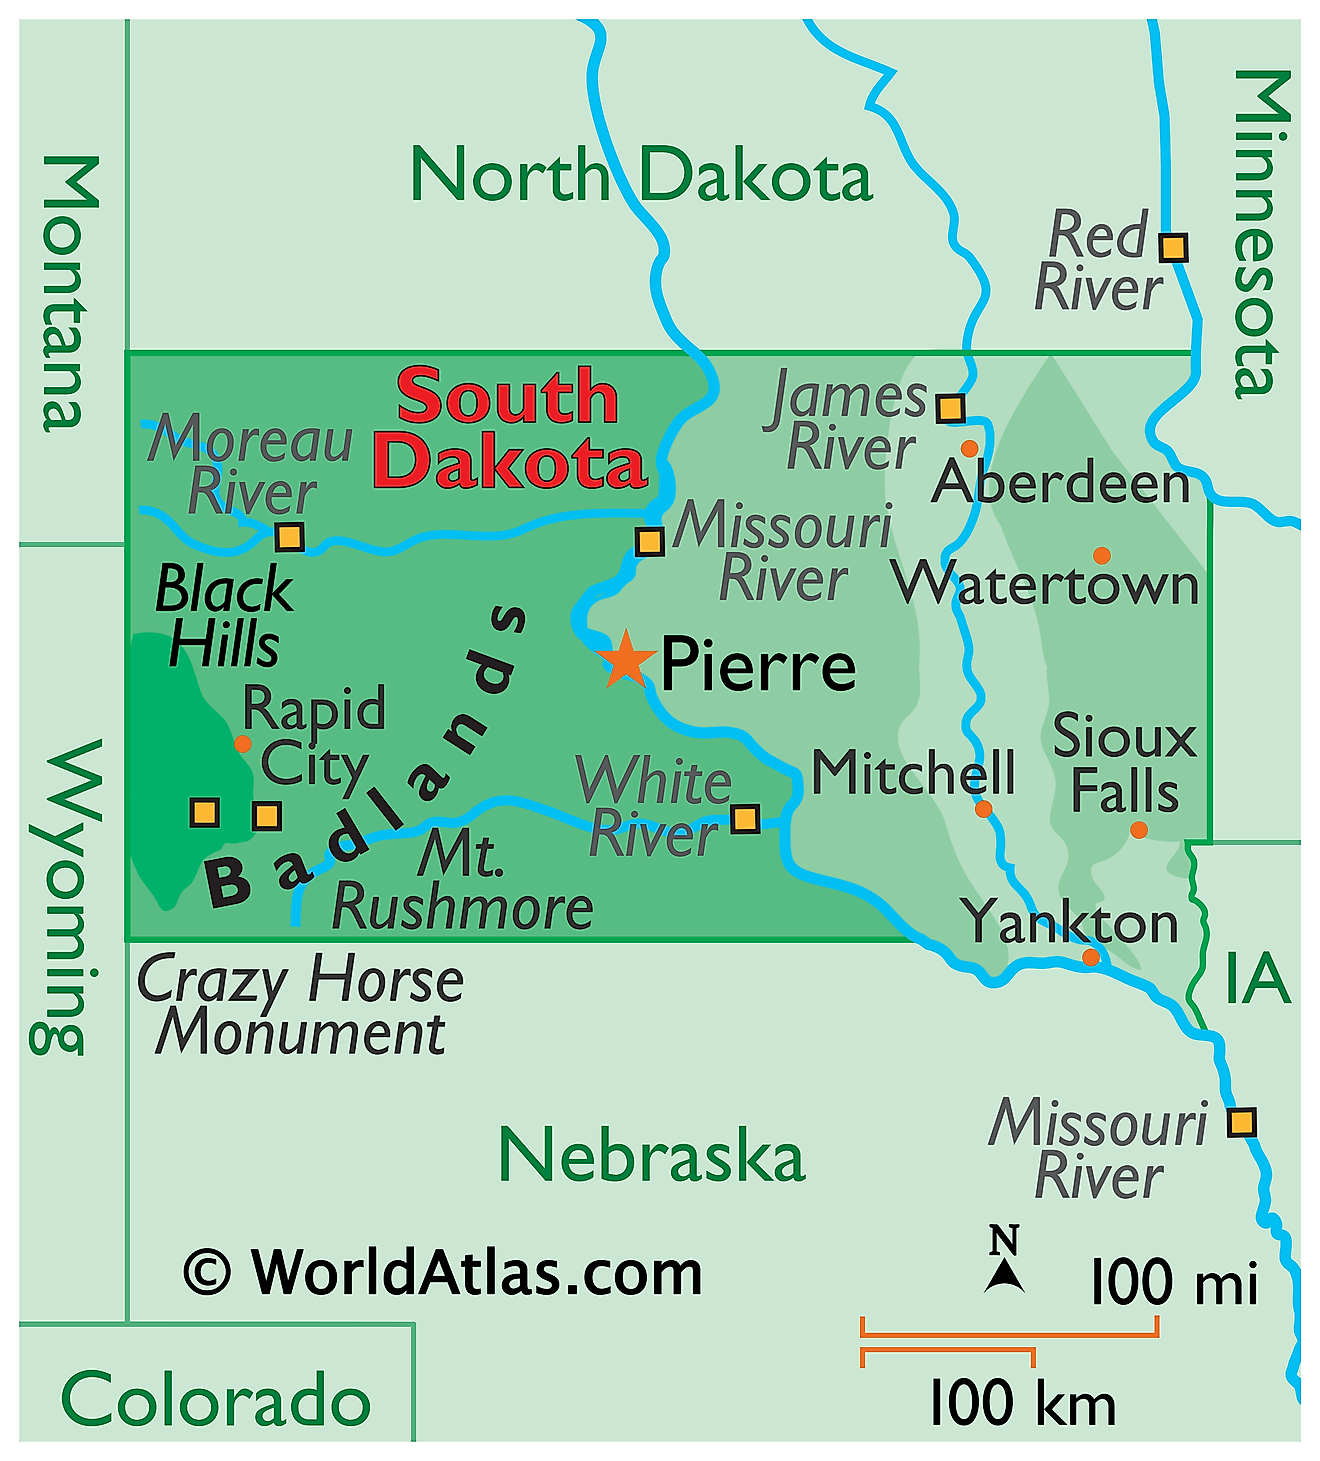 South Dakota Maps &amp; Facts - World Atlas